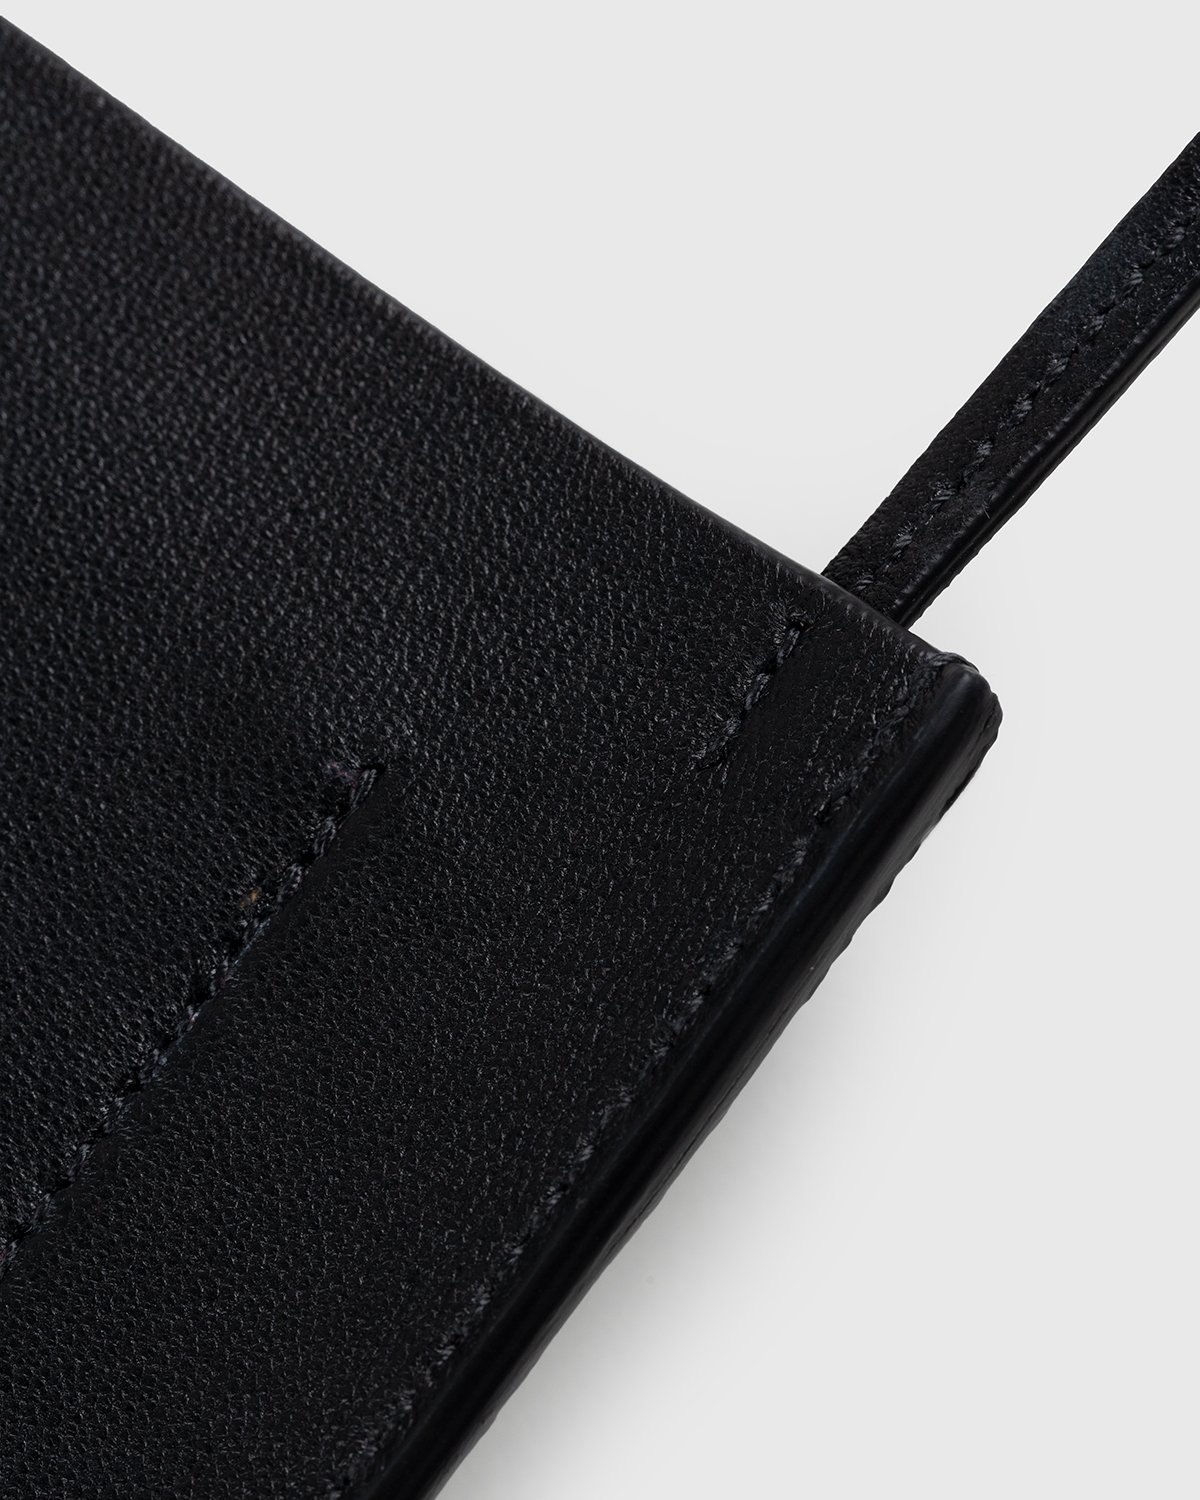 Jil Sander - Leather Phone Holder Pouch Black - Lifestyle - Black - Image 4